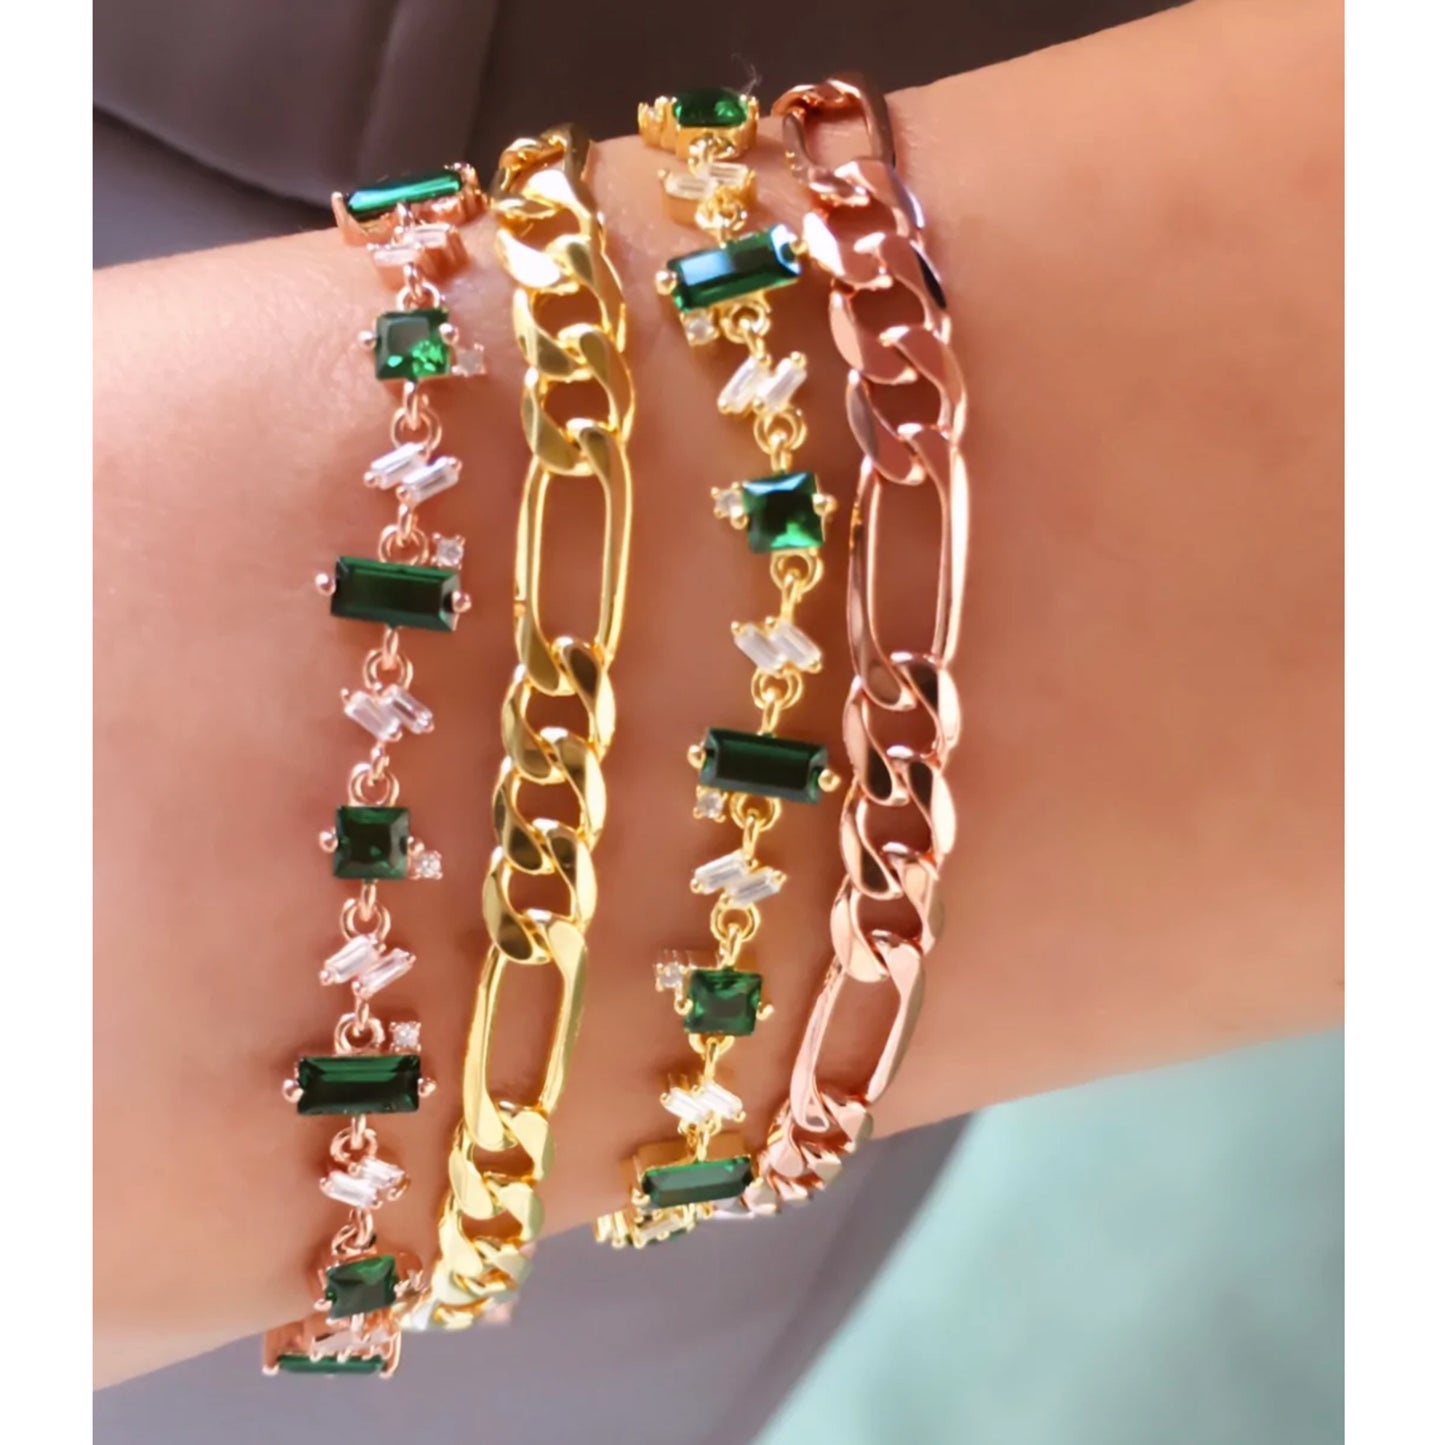 Linda Figaro Chain Bracelet